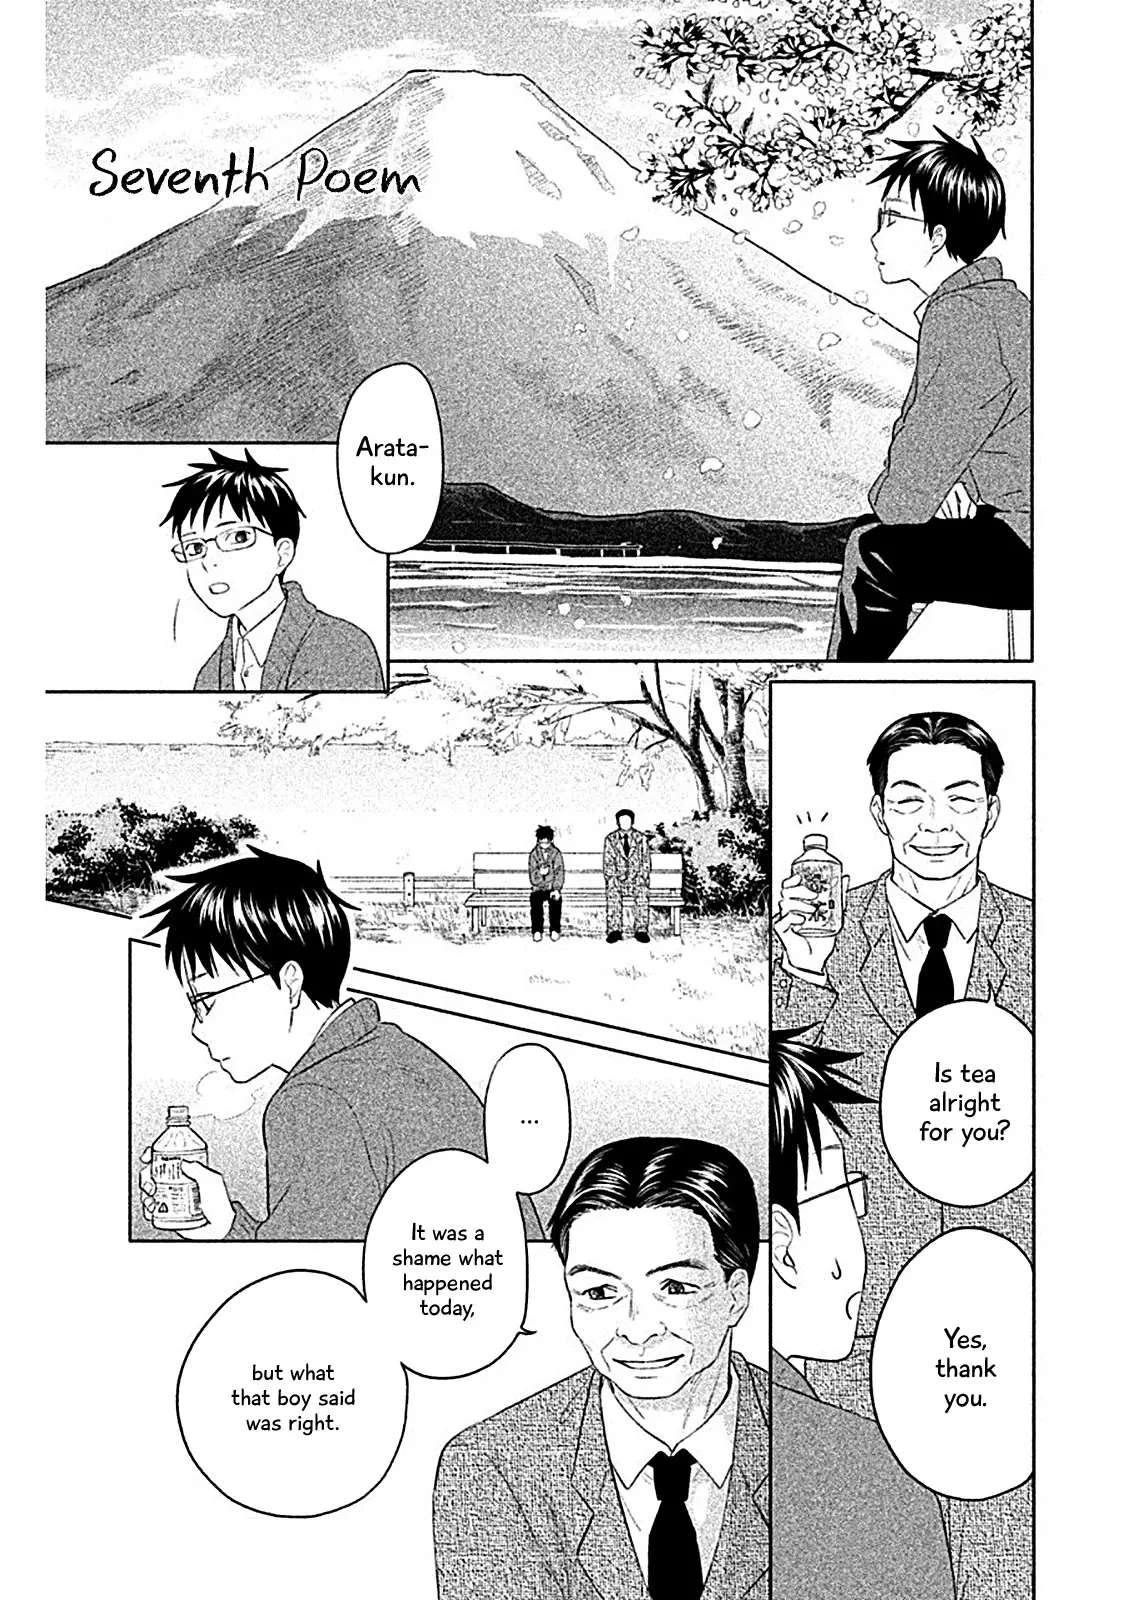 Chihayafuru: Middle School Arc - 7 page 7